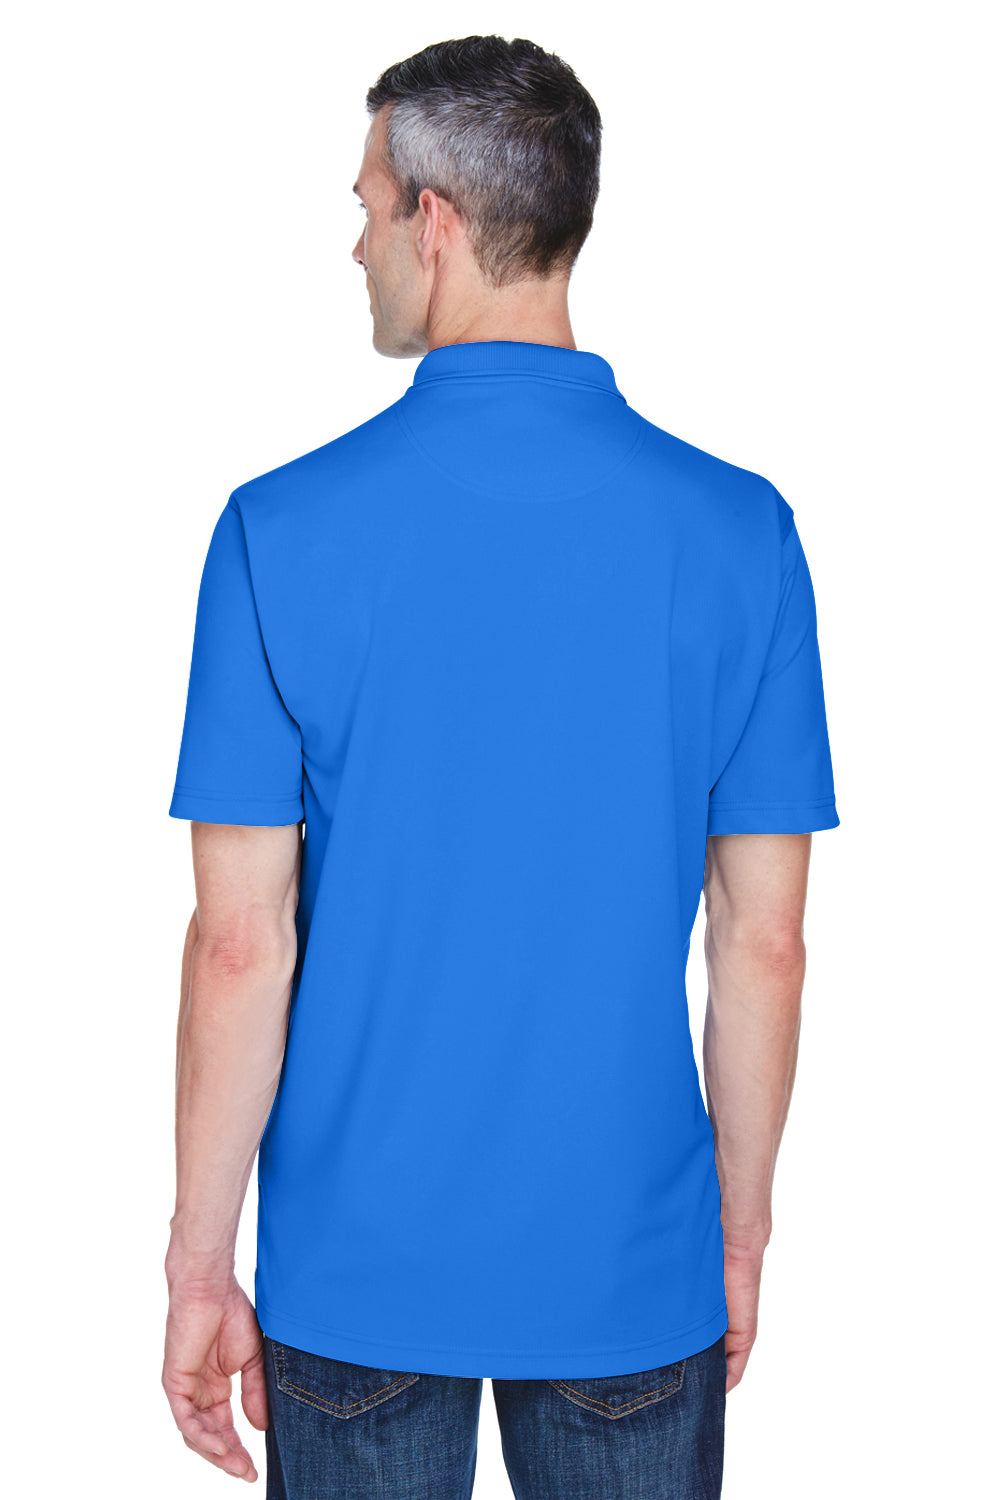 UltraClub 8445 Mens Cool & Dry Performance Moisture Wicking Short Sleeve Polo Shirt Royal Blue Back